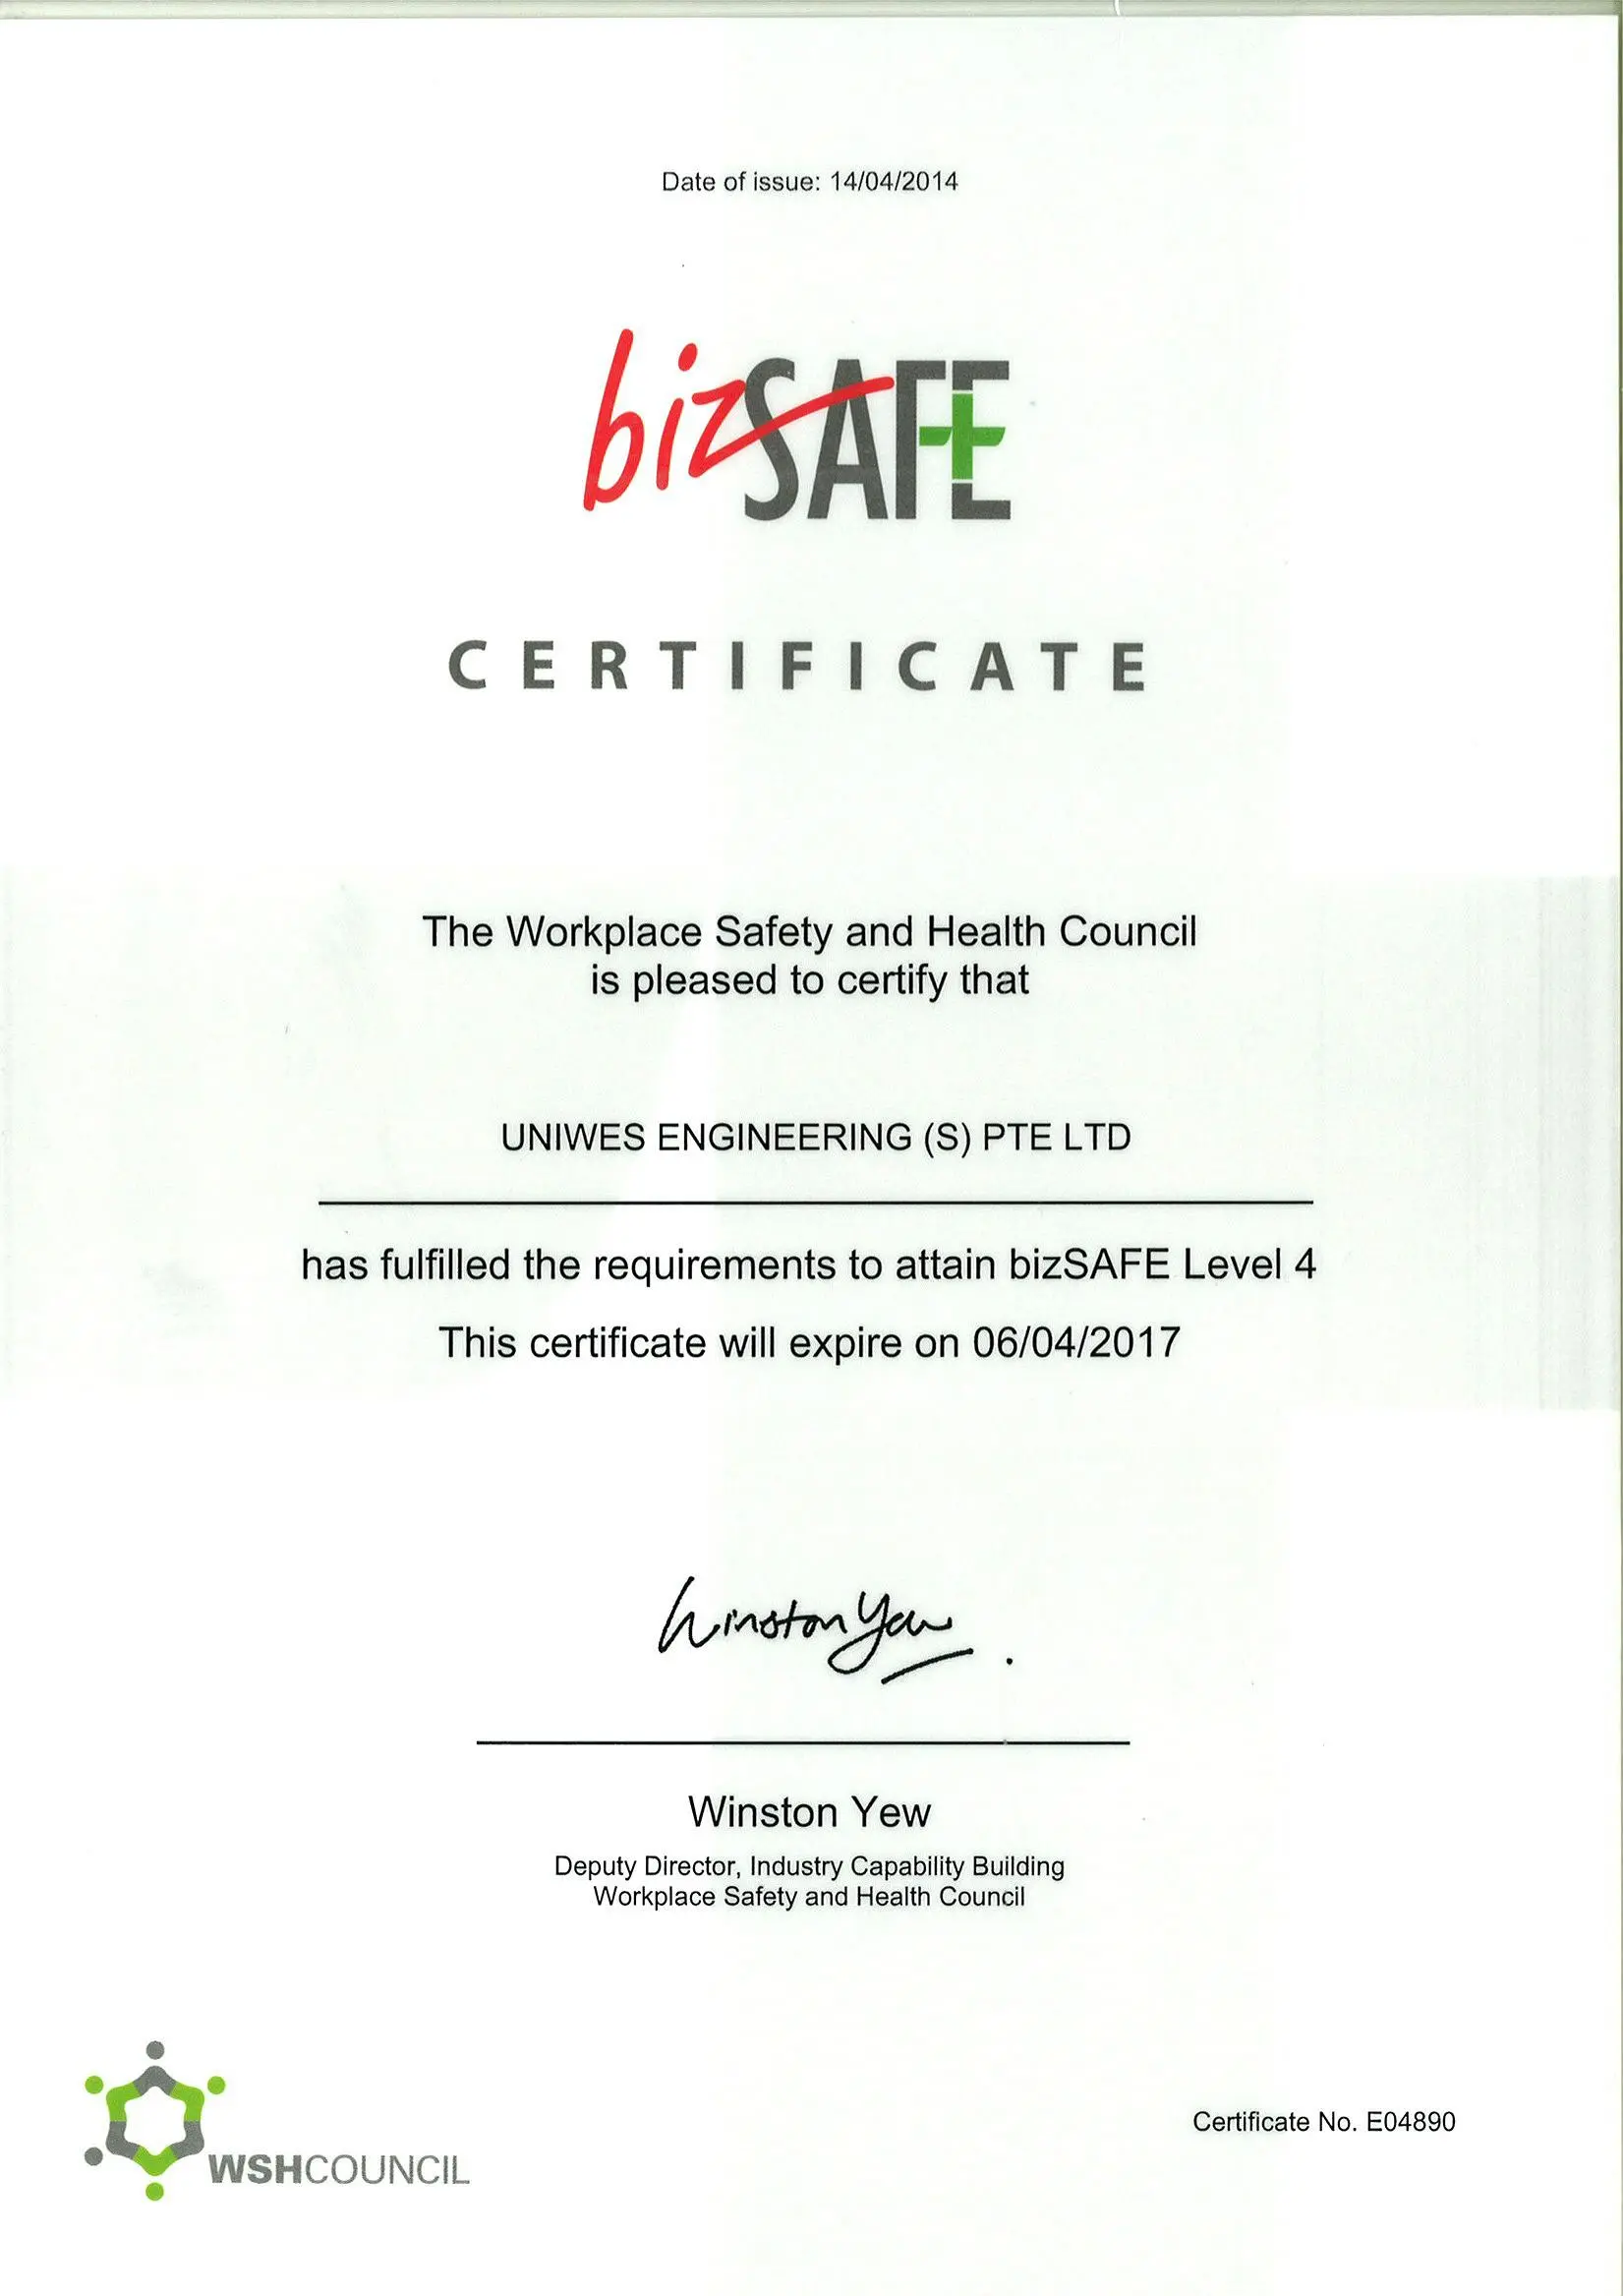 Bizsafe certification